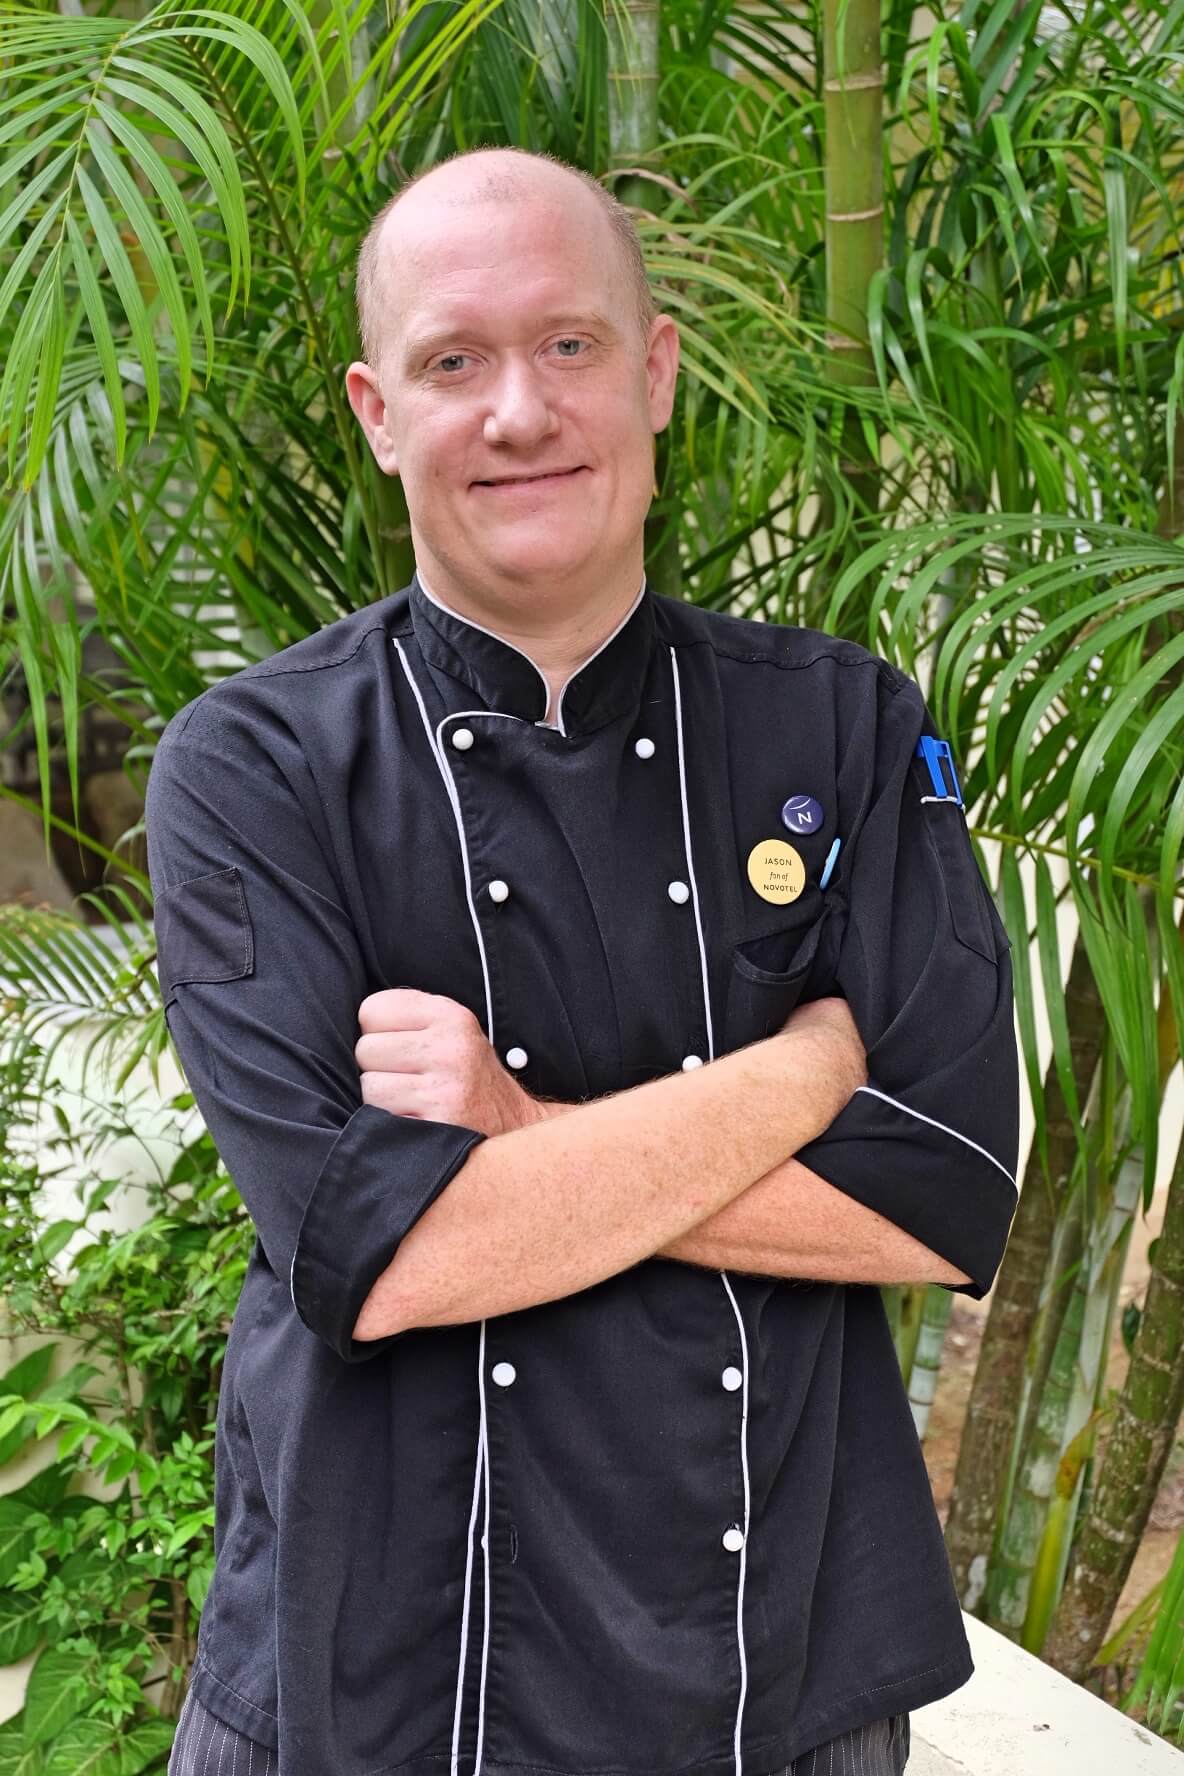 American guest chef Jason Burgett